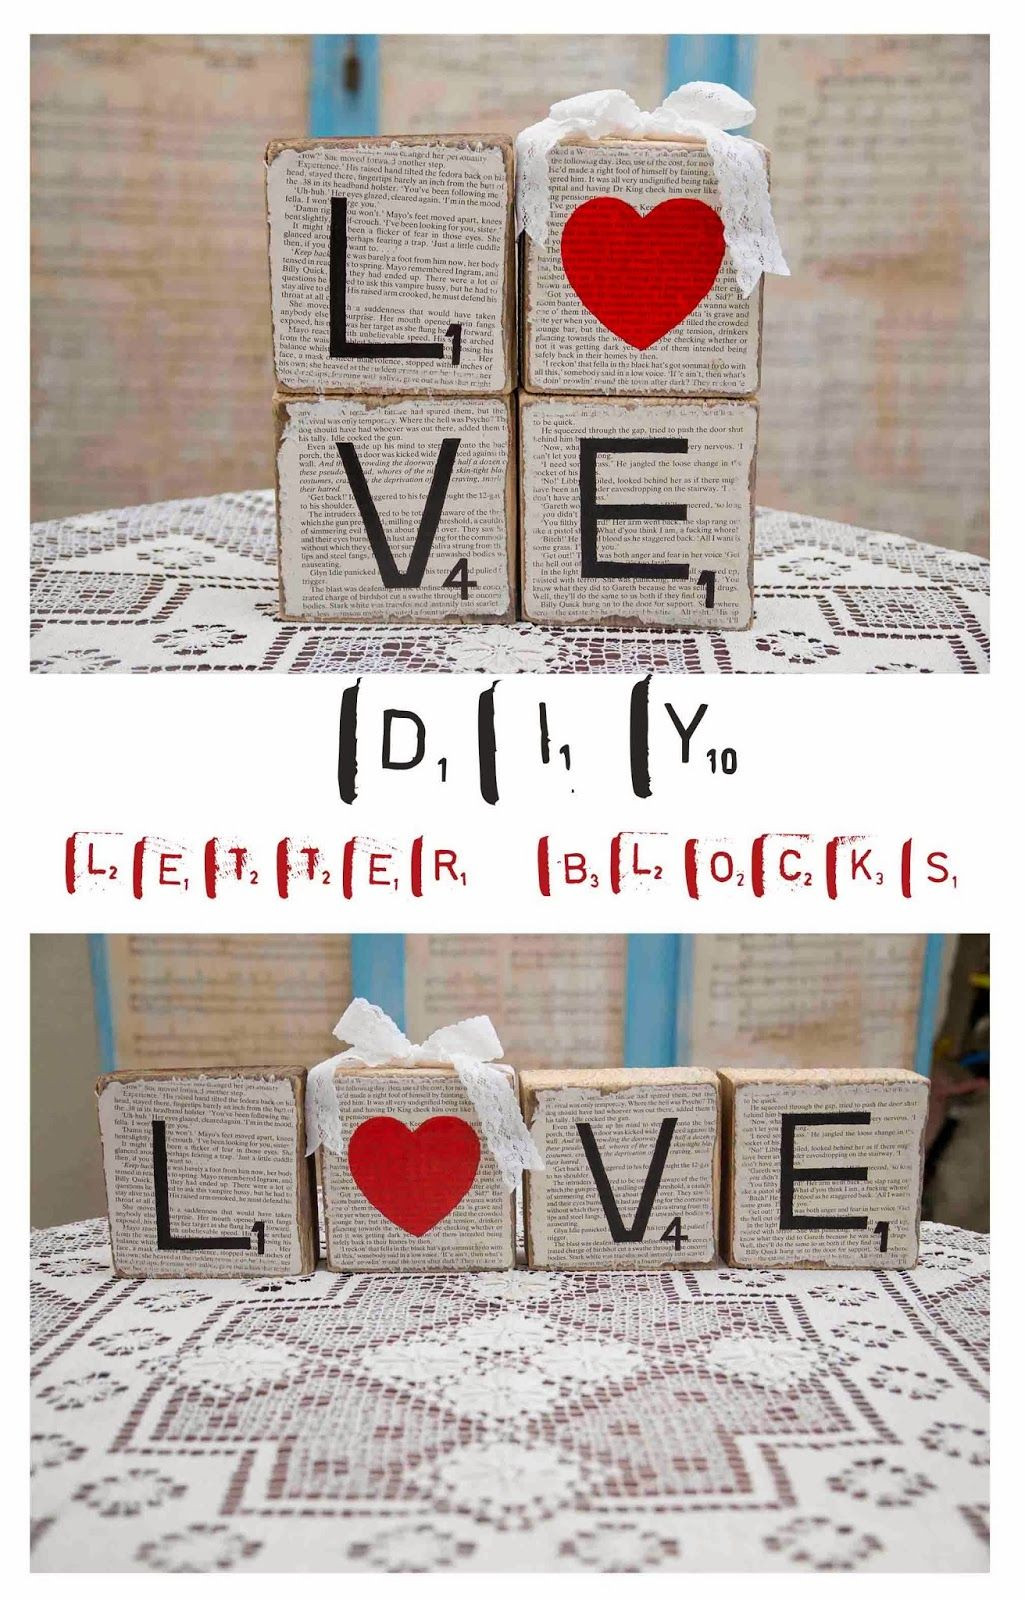 DIY Wooden Block Letters
 DIY valentines decor wooden letter blocks